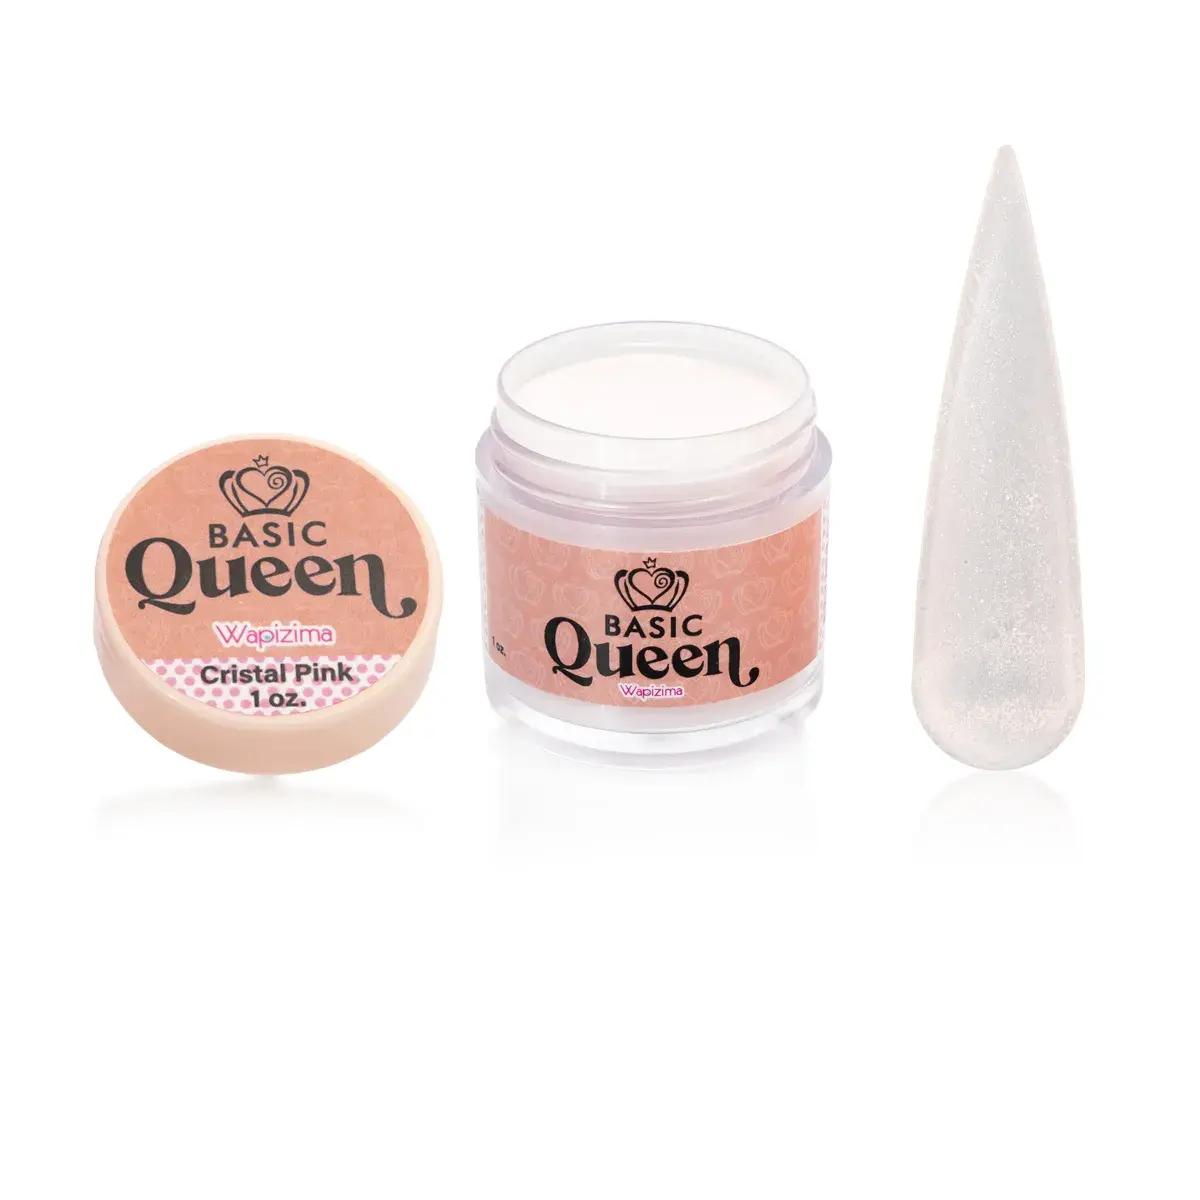 W. Basic Queen Cristal Pink 1oz